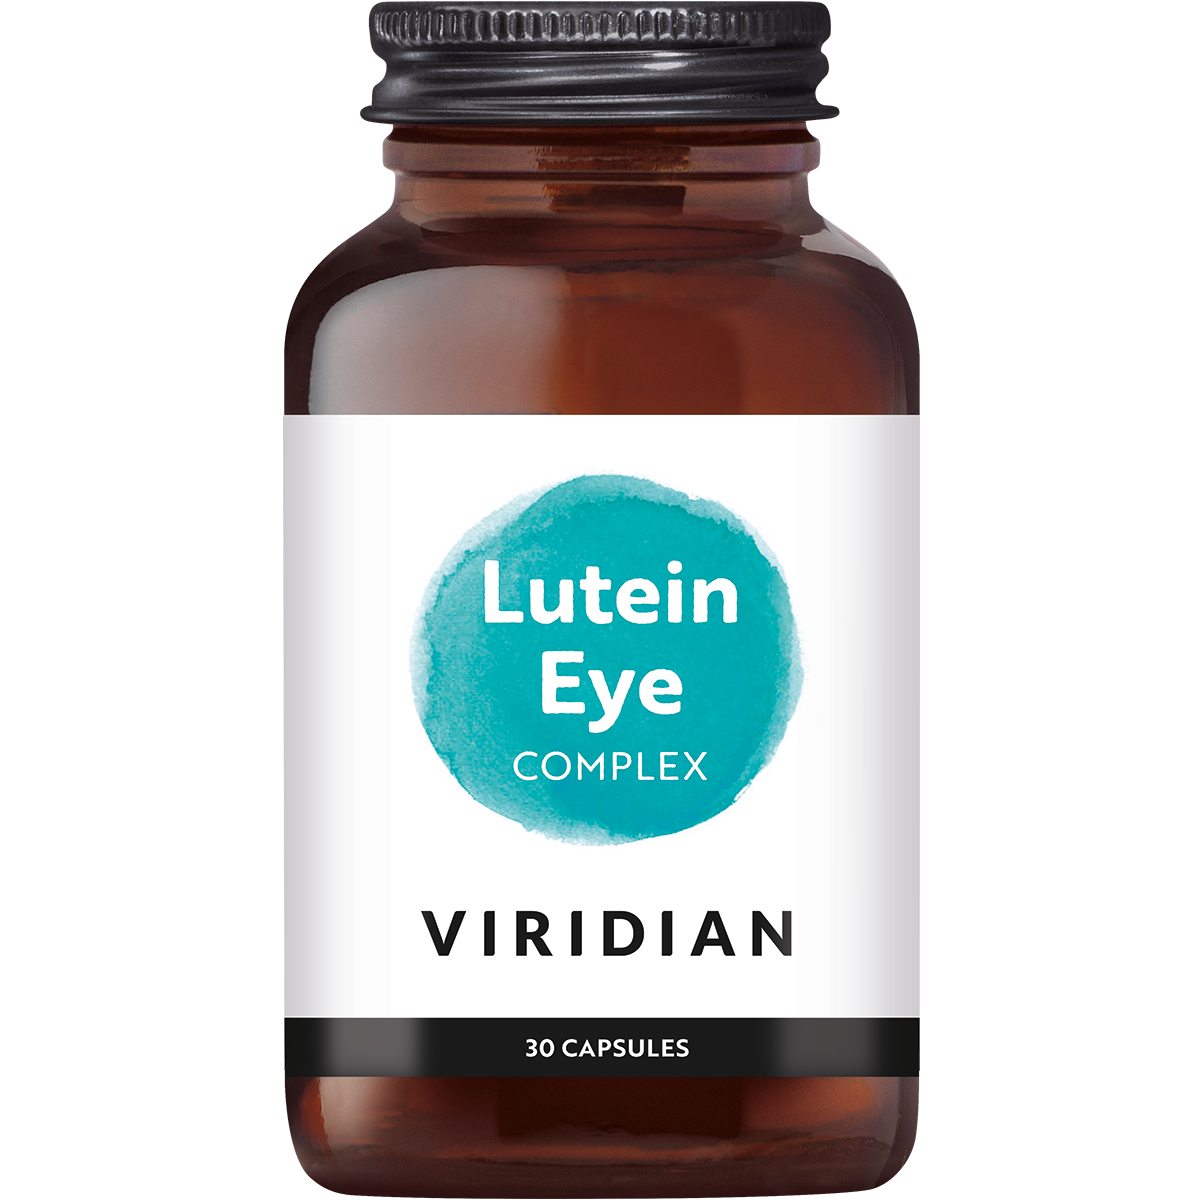 Viridian Lutein Eye Complex (30 stuks)